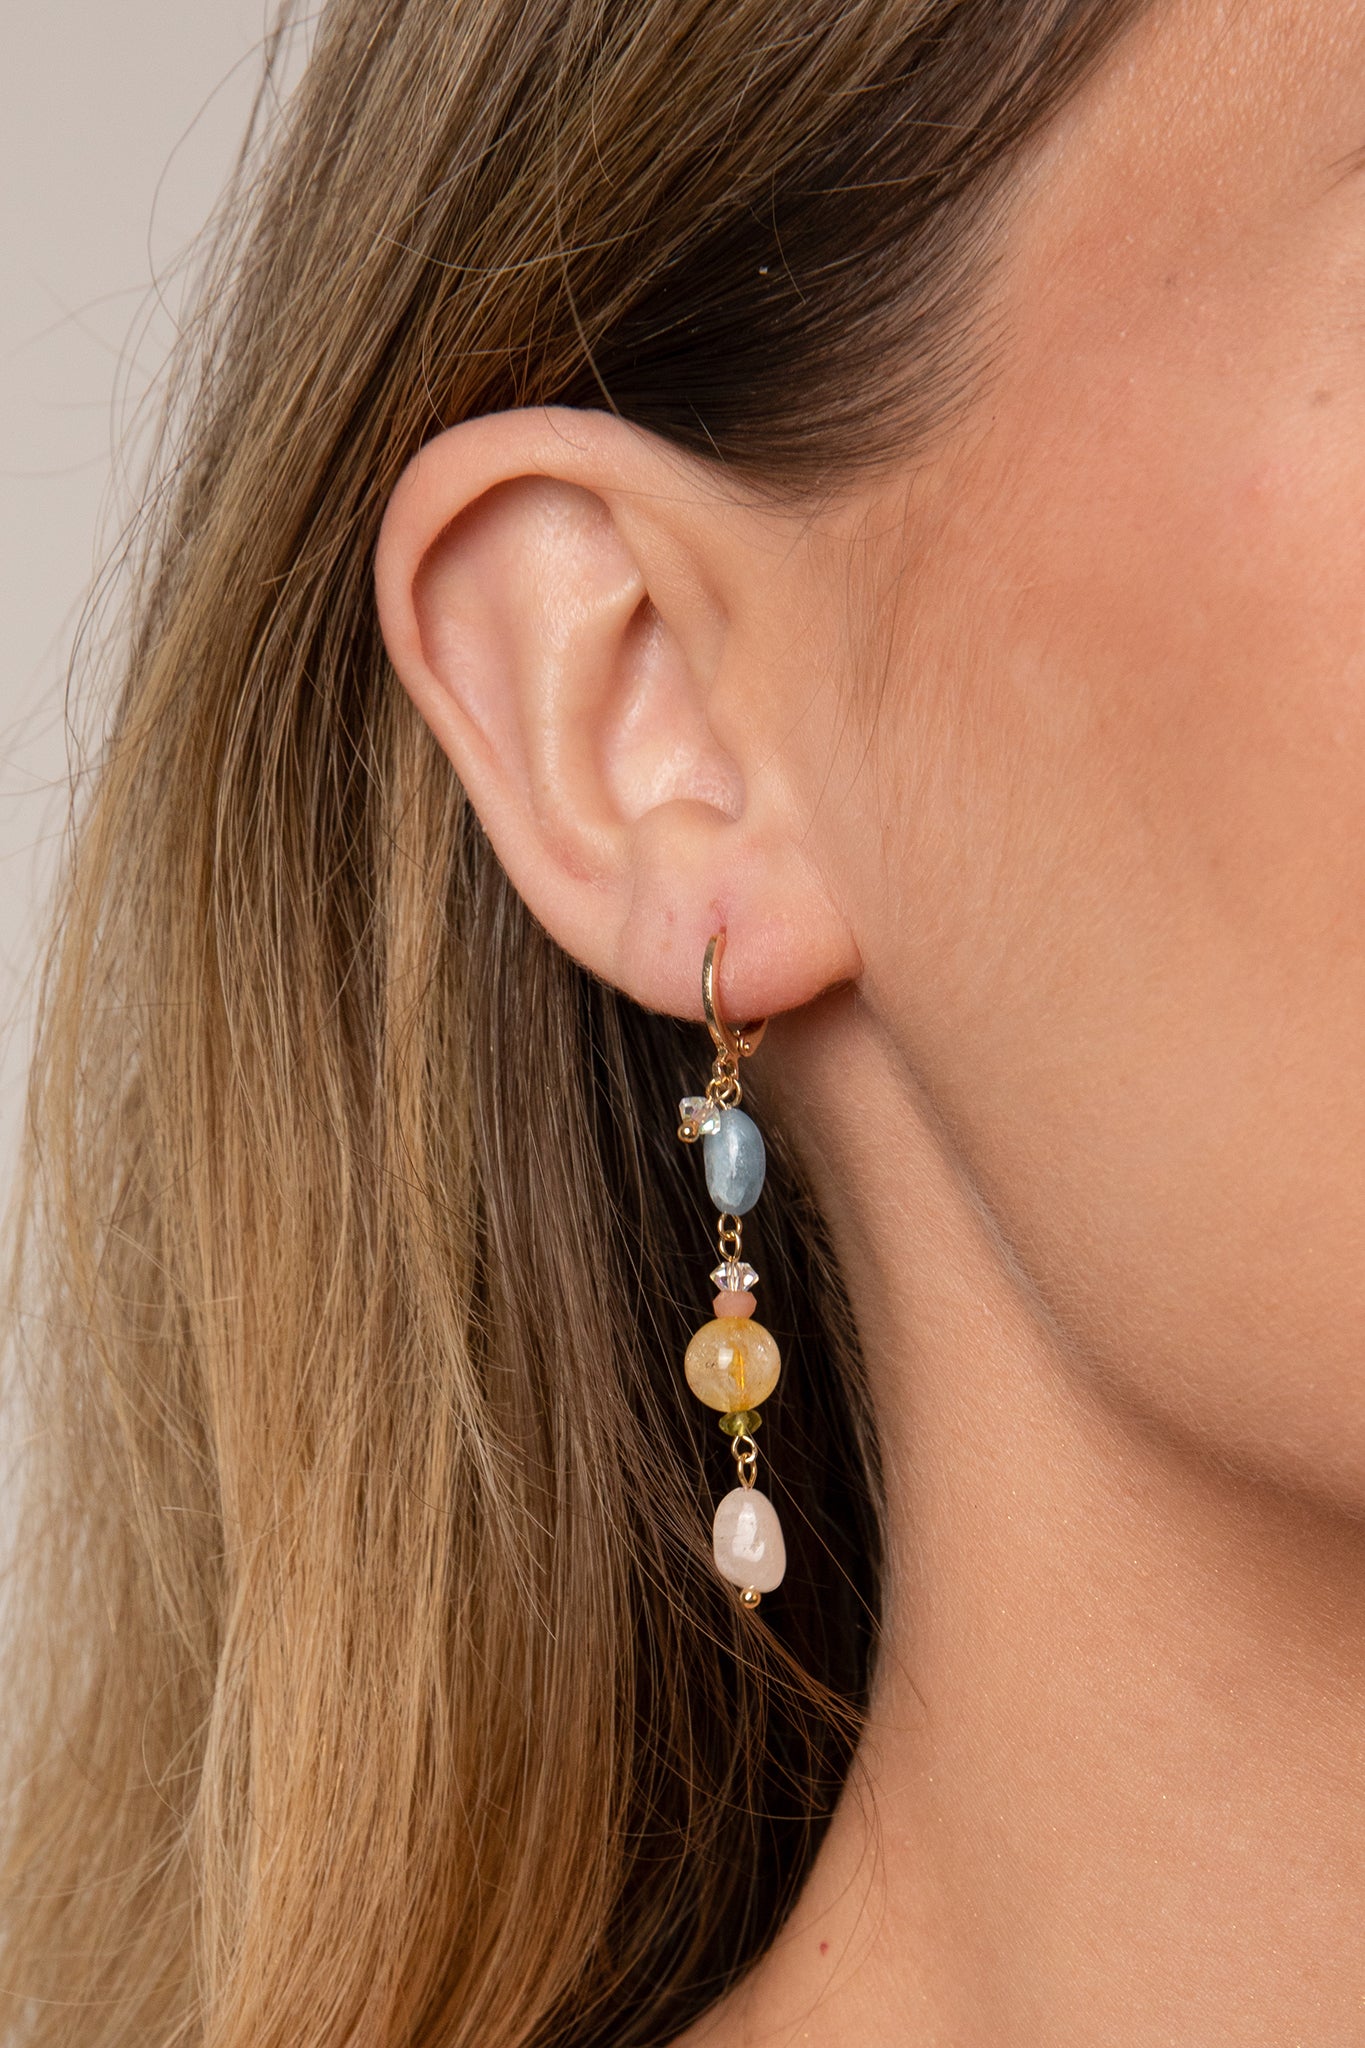 SG34 - High Fashion Candy earrings